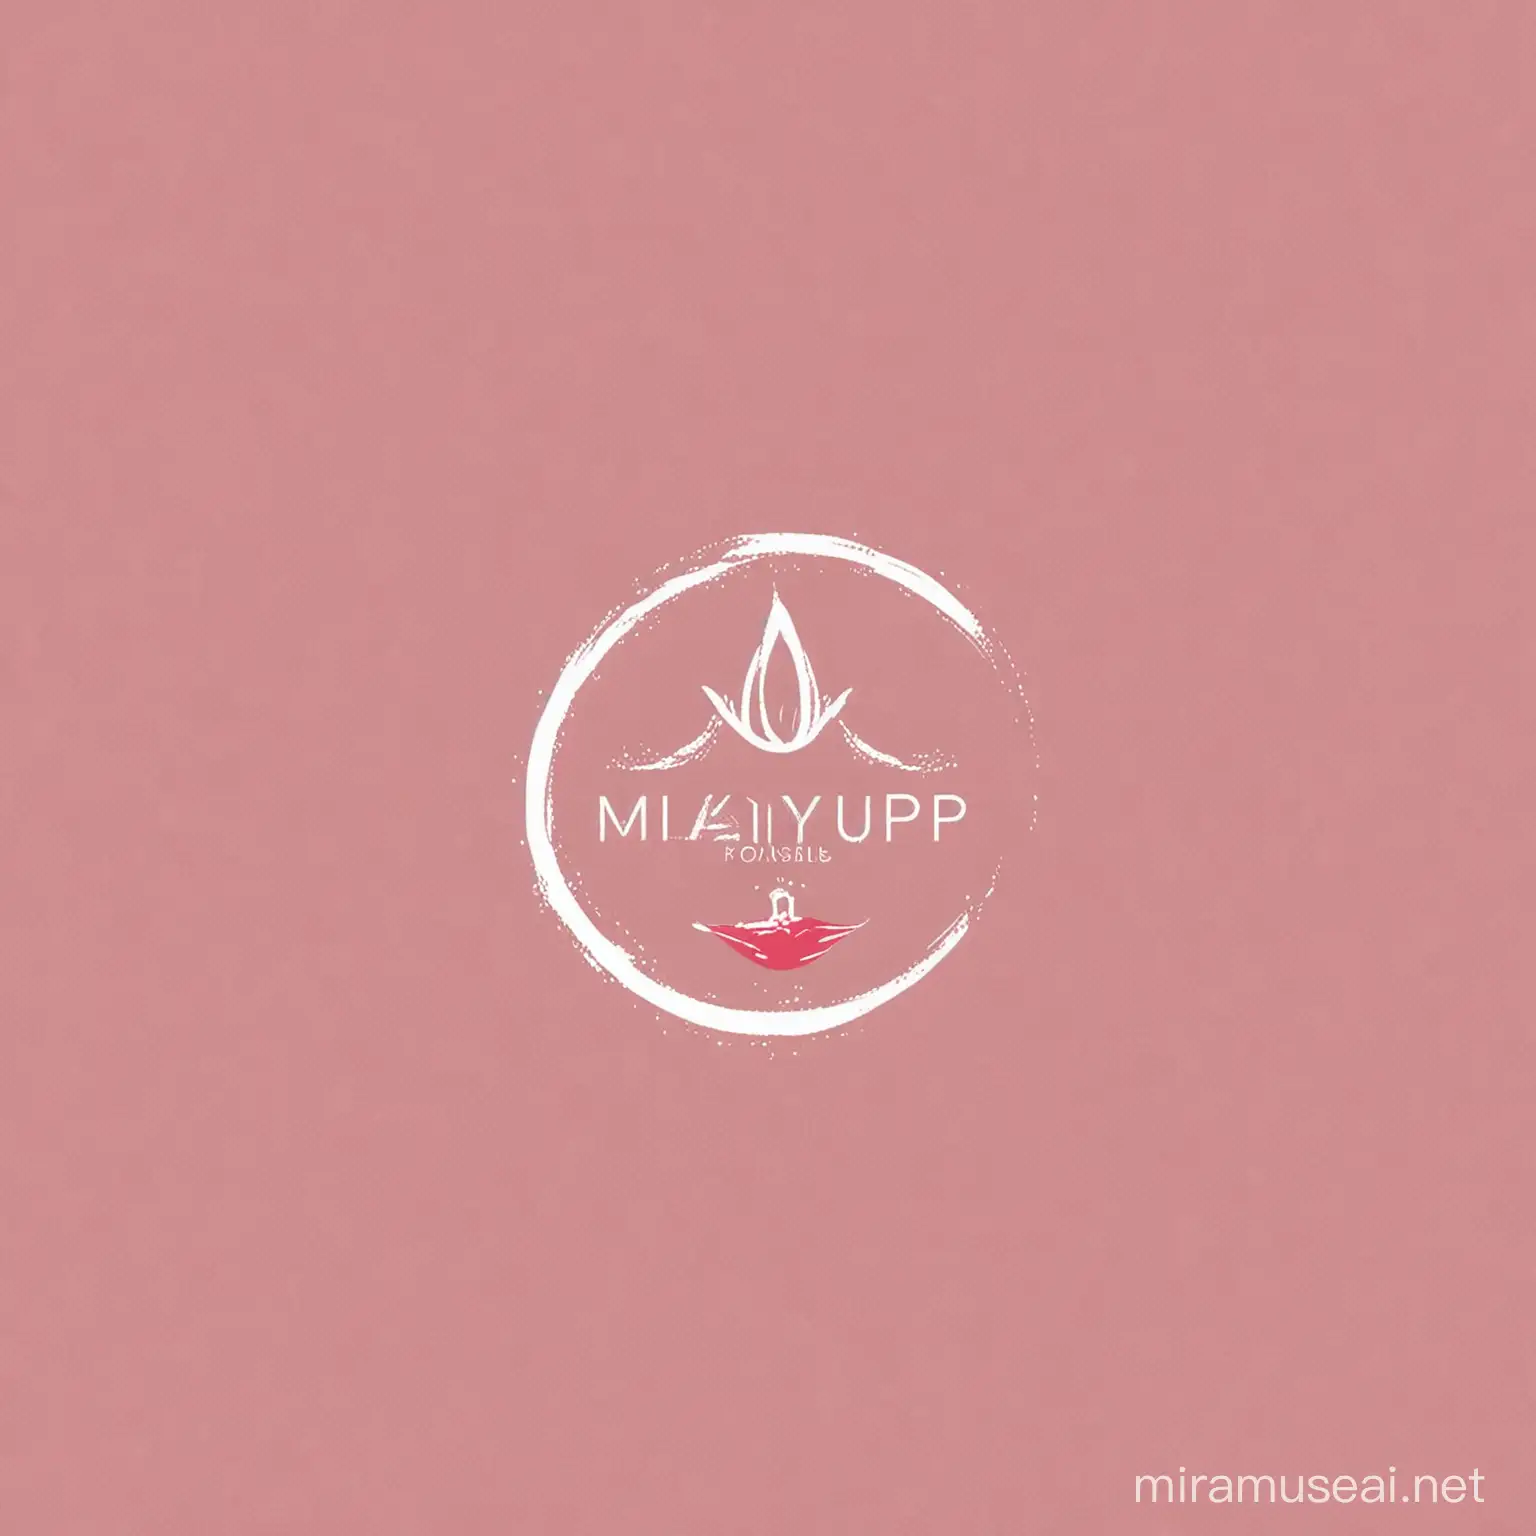 Elegant Minimalist Makeup Logo Design